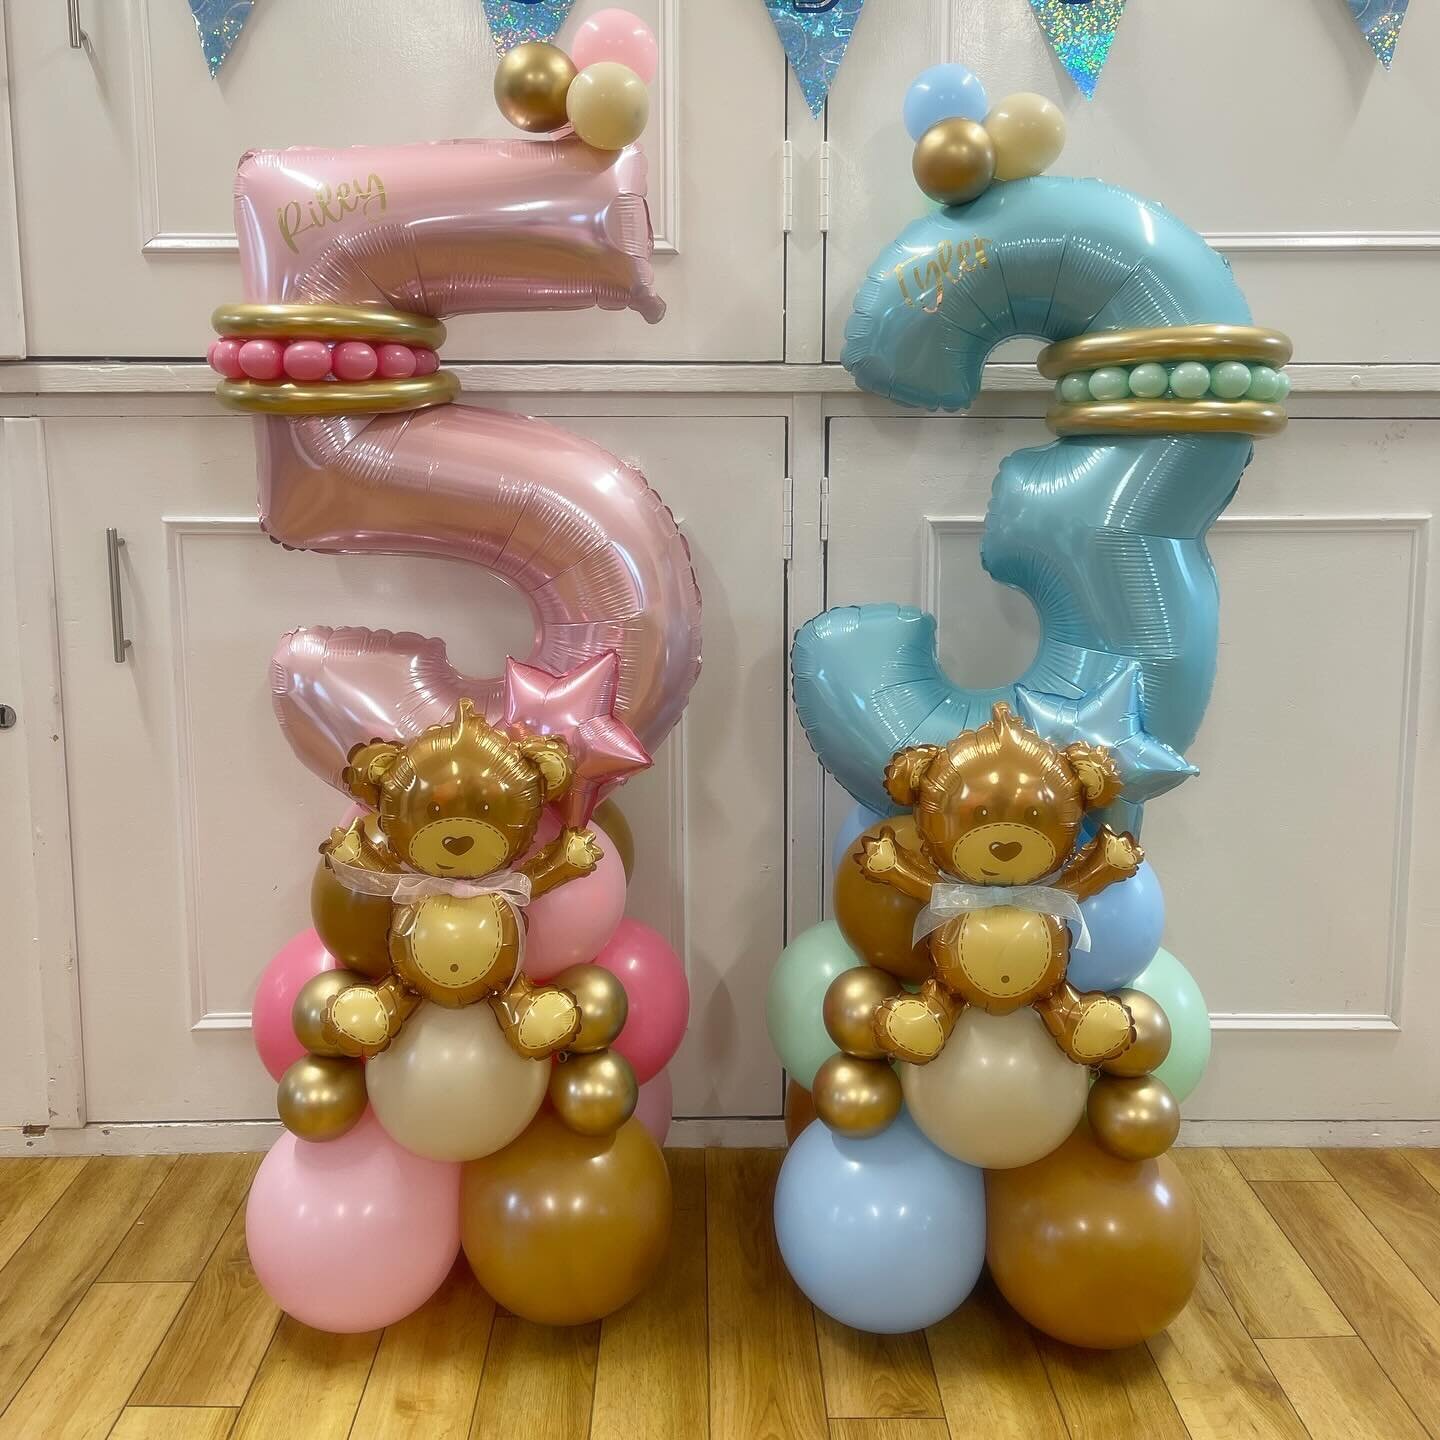 Teddy Bears Picnic themed birthday balloon stacks for 5yr &amp; 3yr old siblings 🧸🧸🥪🥪

#balloonstacks #balloontowers #balloons #balloondecor #birthdayballoons #teddybearspicnic #teddybearspicnictheme #kidsparty #kidspartyideas #kidspartydecor #ba